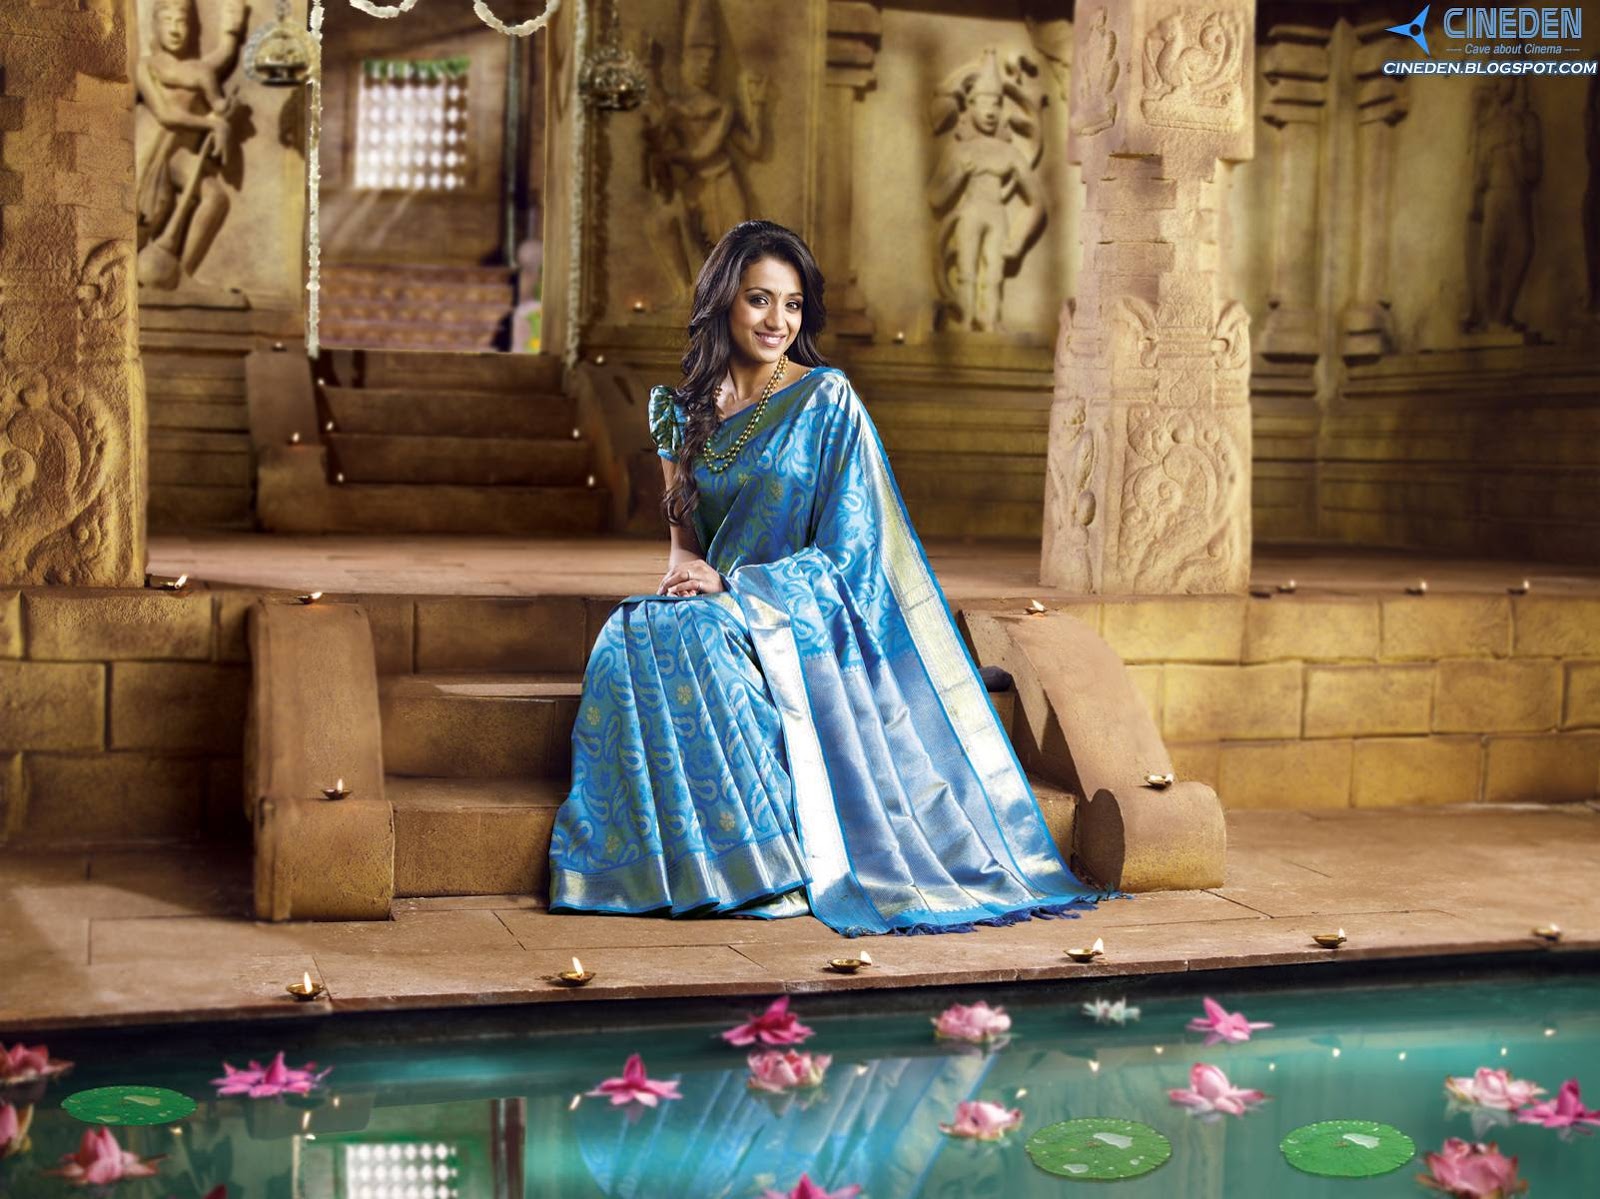 Trisha Krishnan hot Stills in Silk Saree from Pothys Advertisement